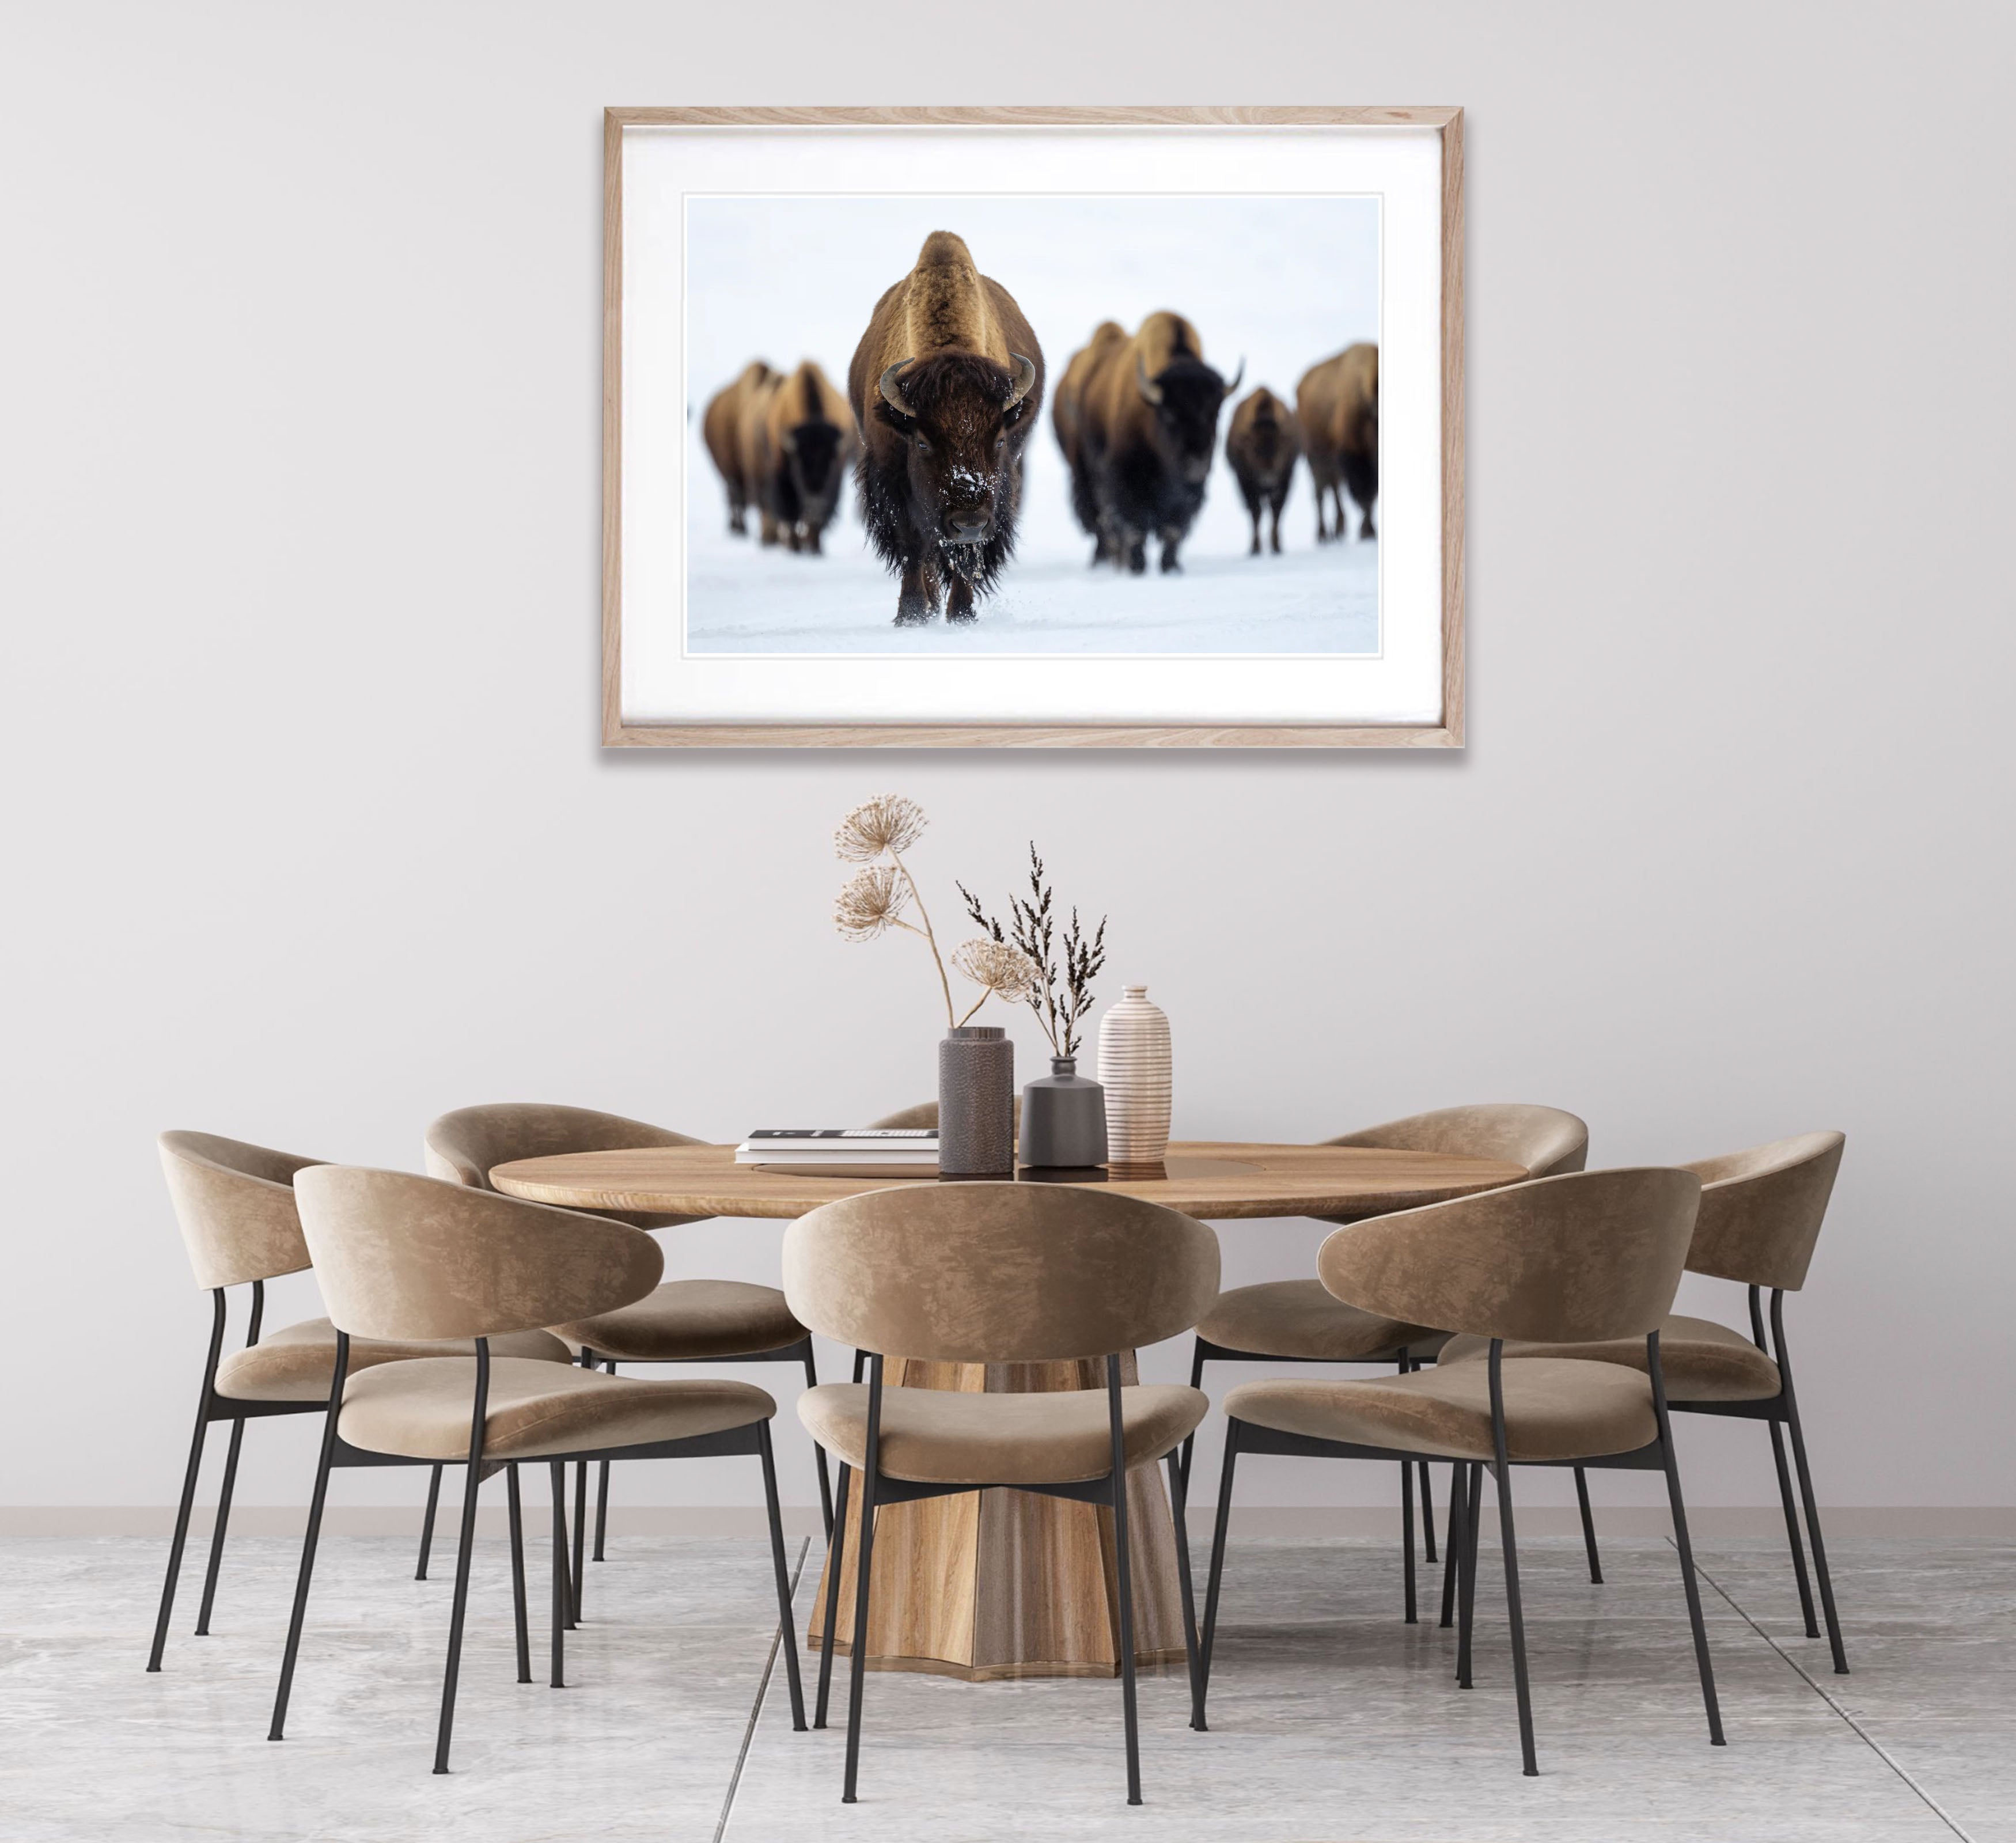 ARTWORK INSTOCK - The Bison, Yellowstone NP - 150x100cms Canvas Print Raw Oak